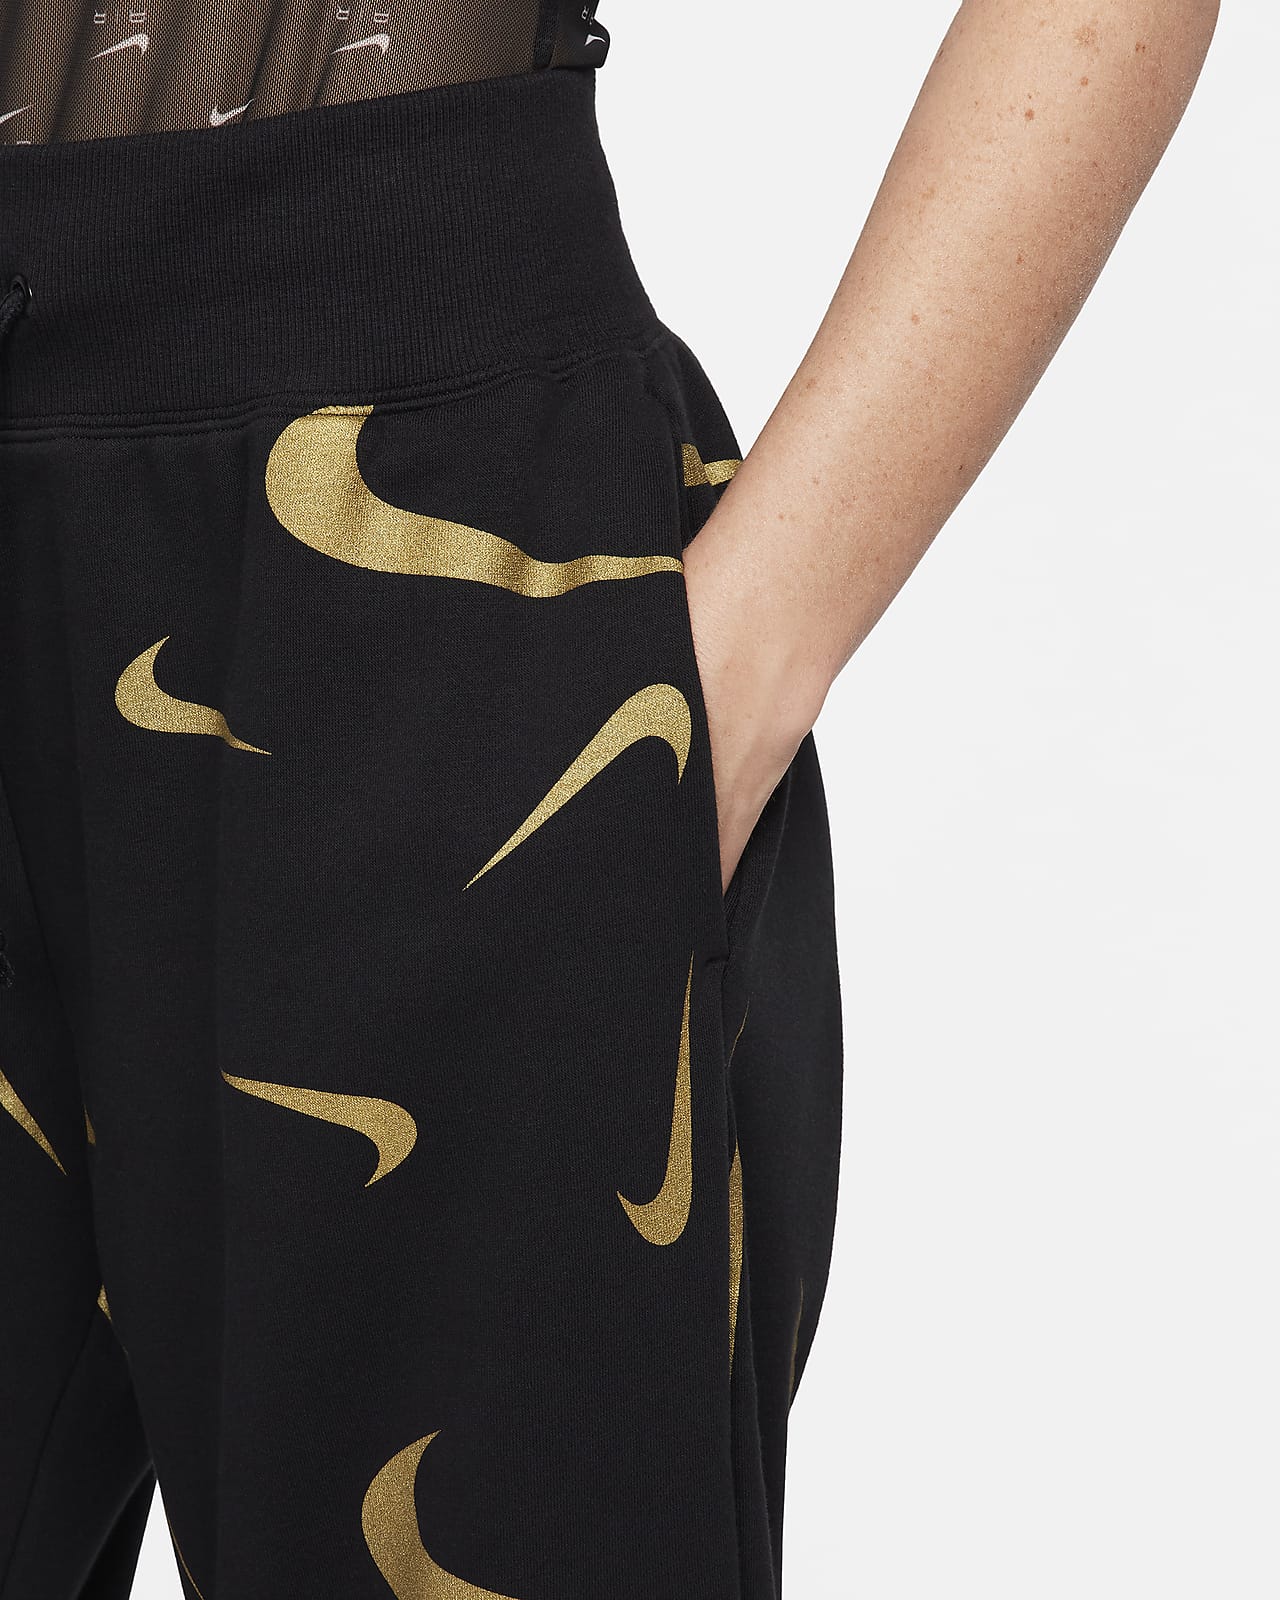 Nike Sportswear Women's High-Waisted Fleece Printed Joggers.